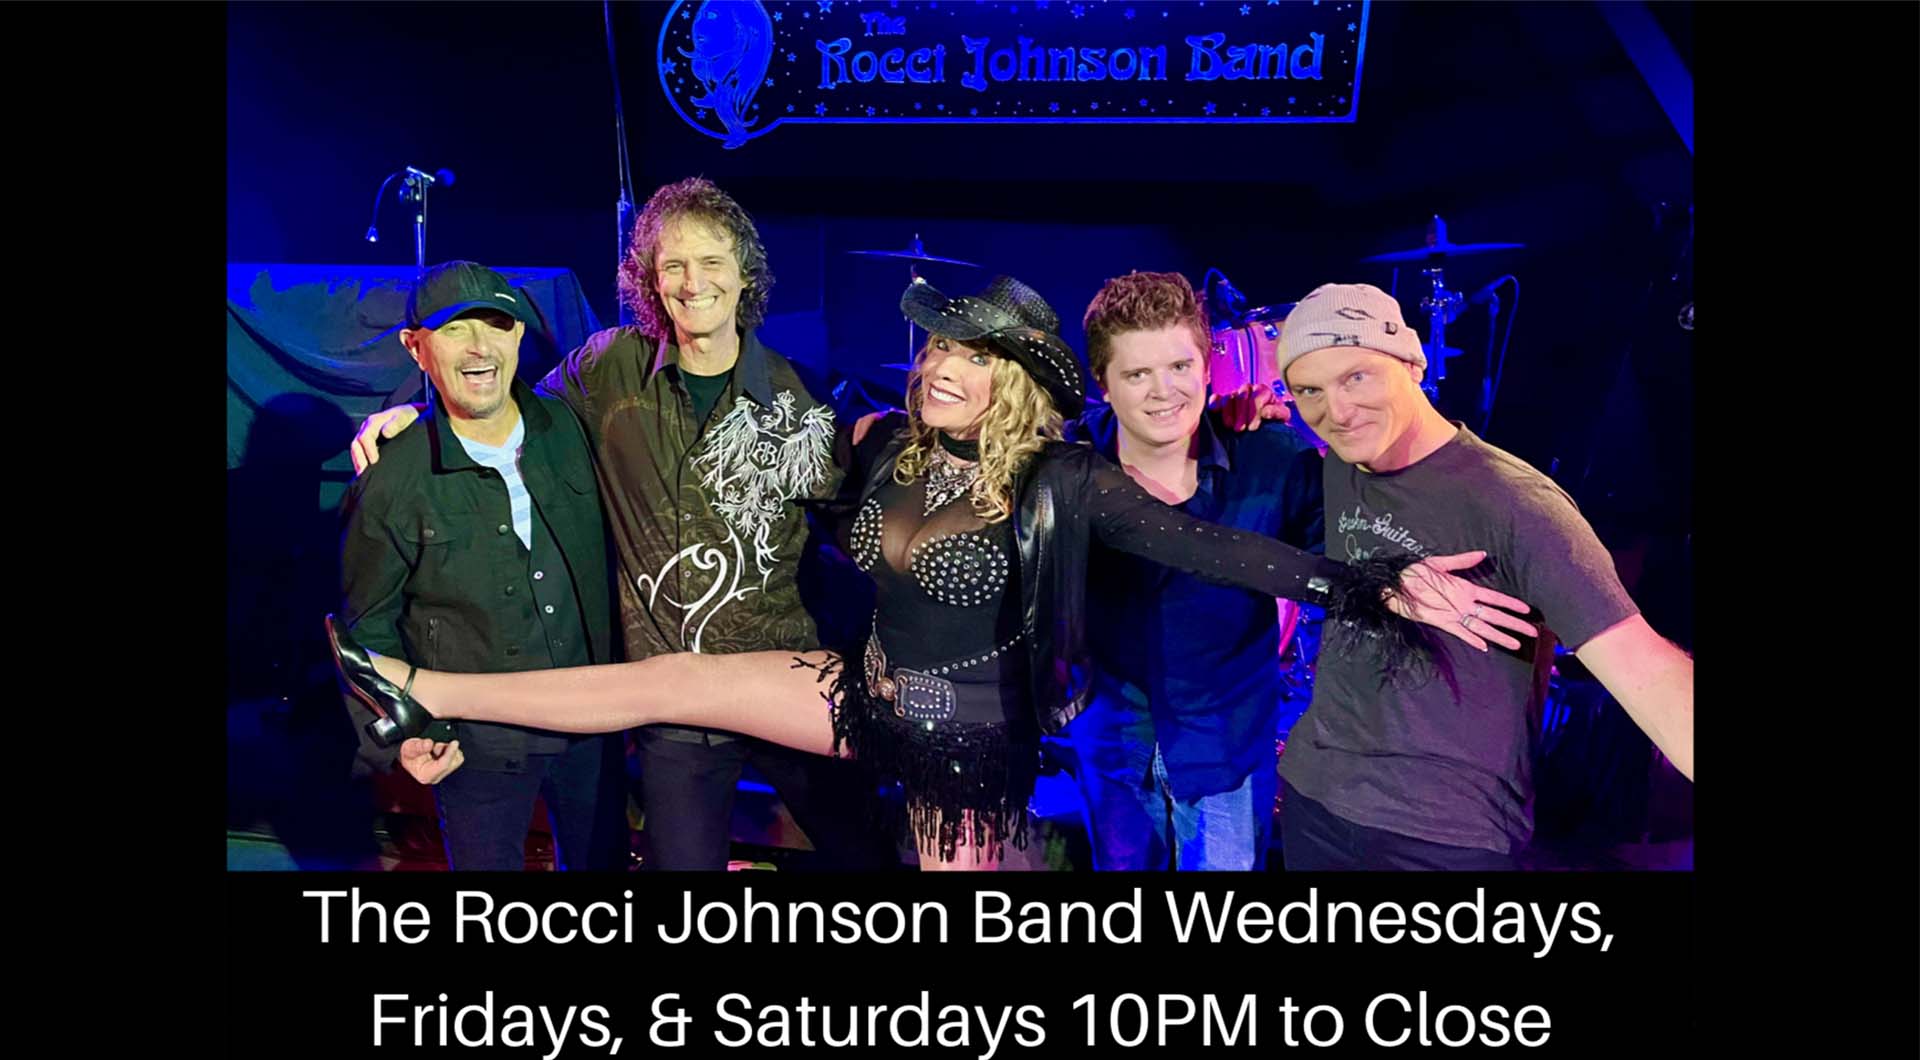 The Rocci Johnson Band